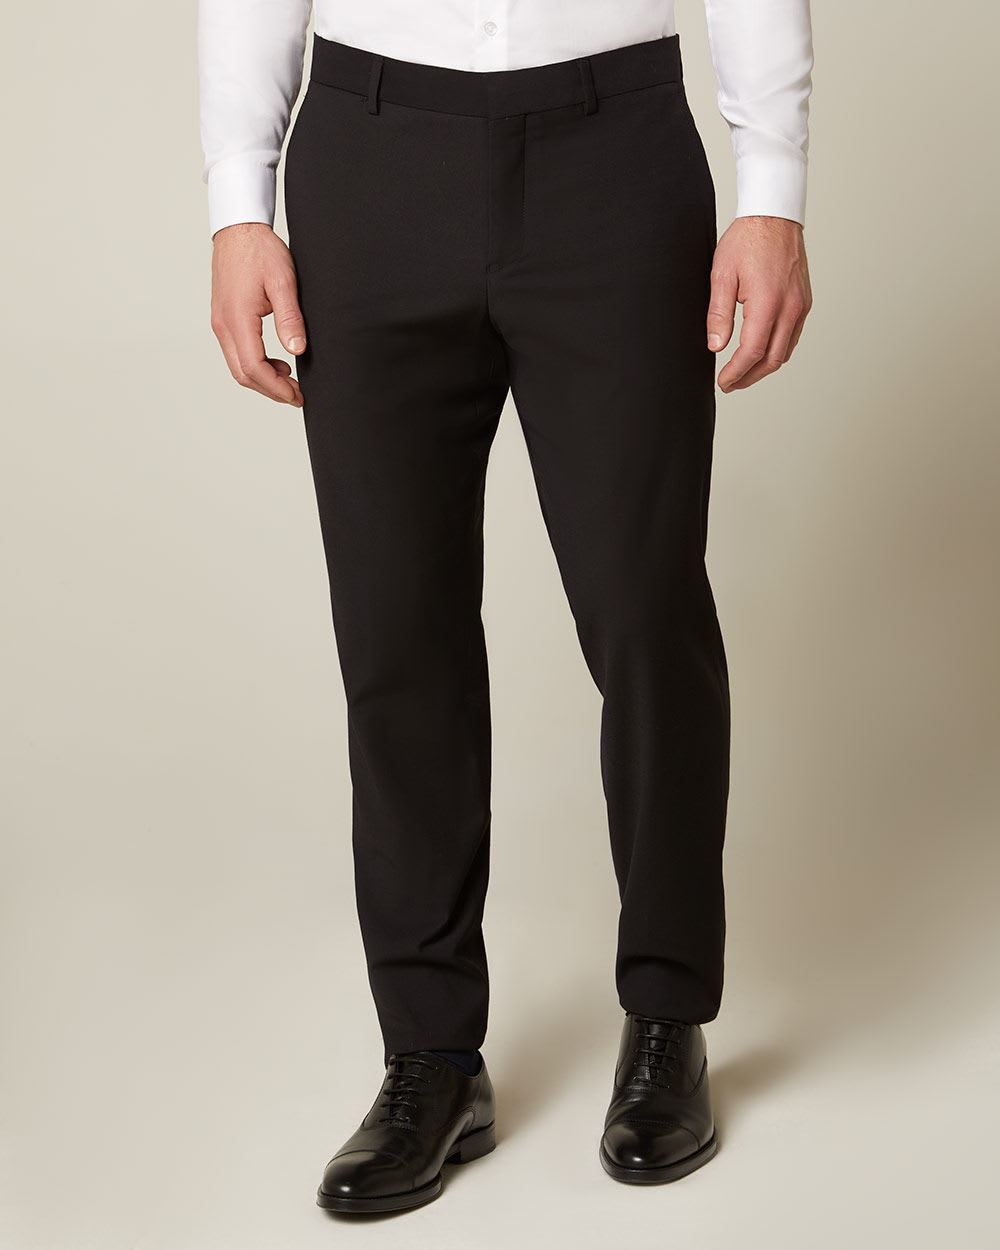 Essential Athletic Fit black wool-blend suit Pant - 30'' | RW&CO.